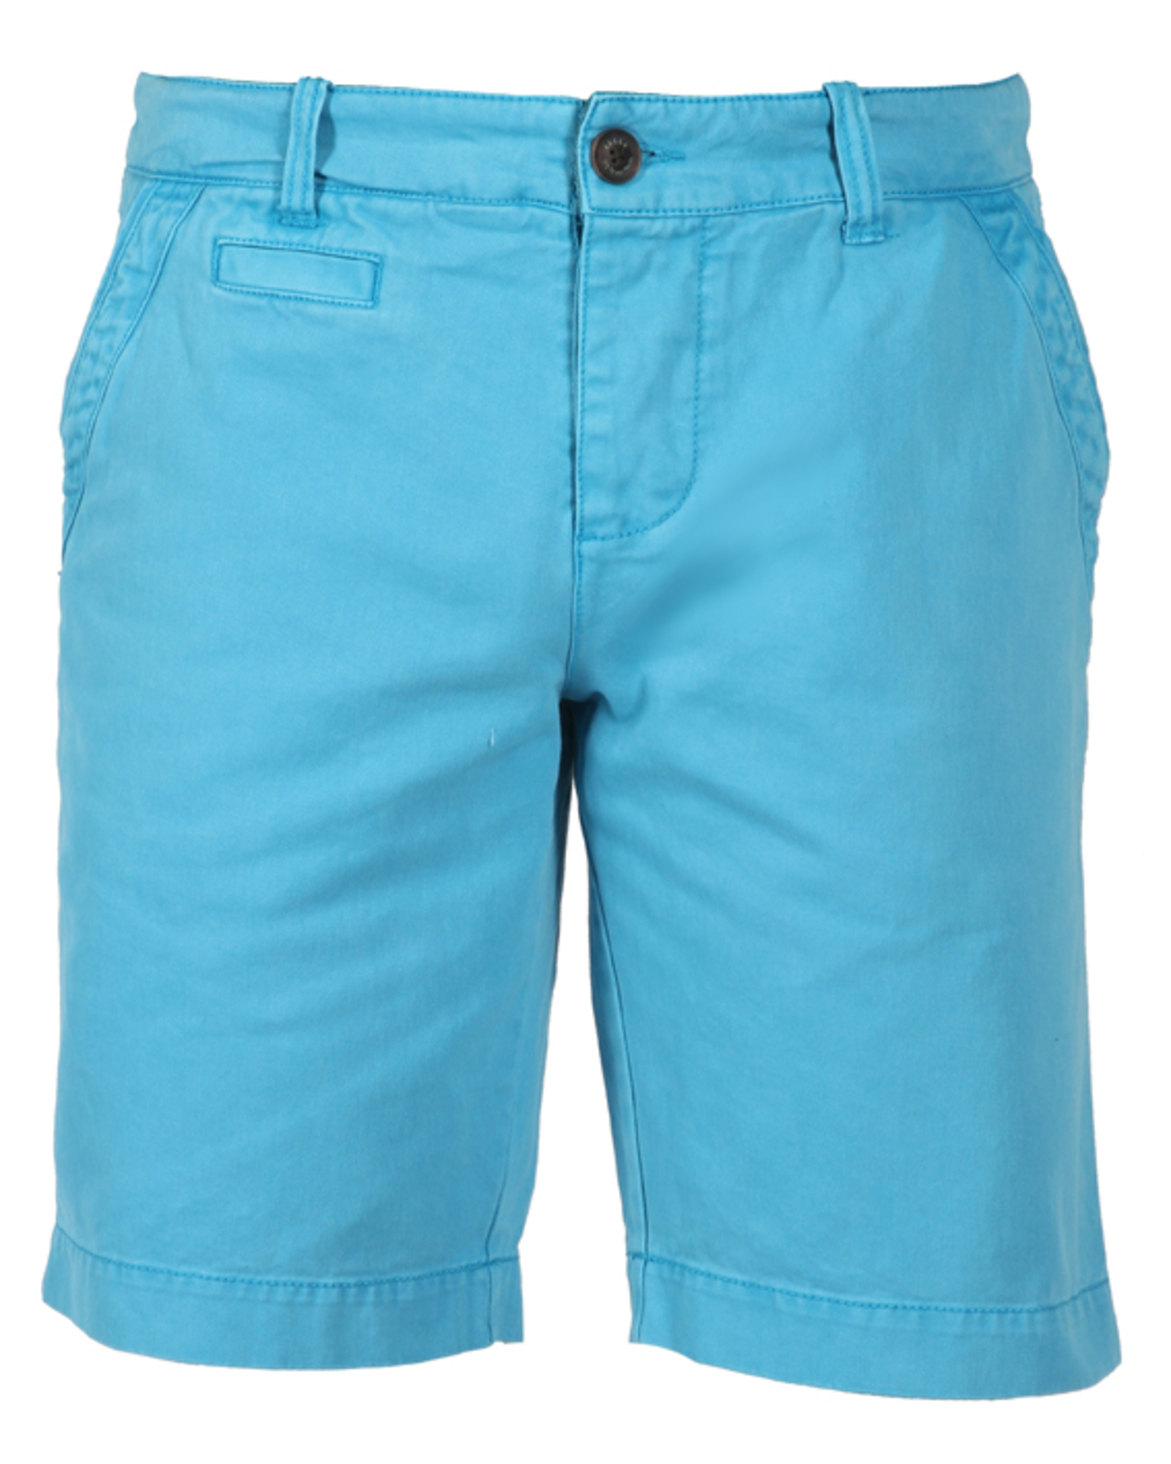 46664 Chino Shorts Turquoise Blue | Zando